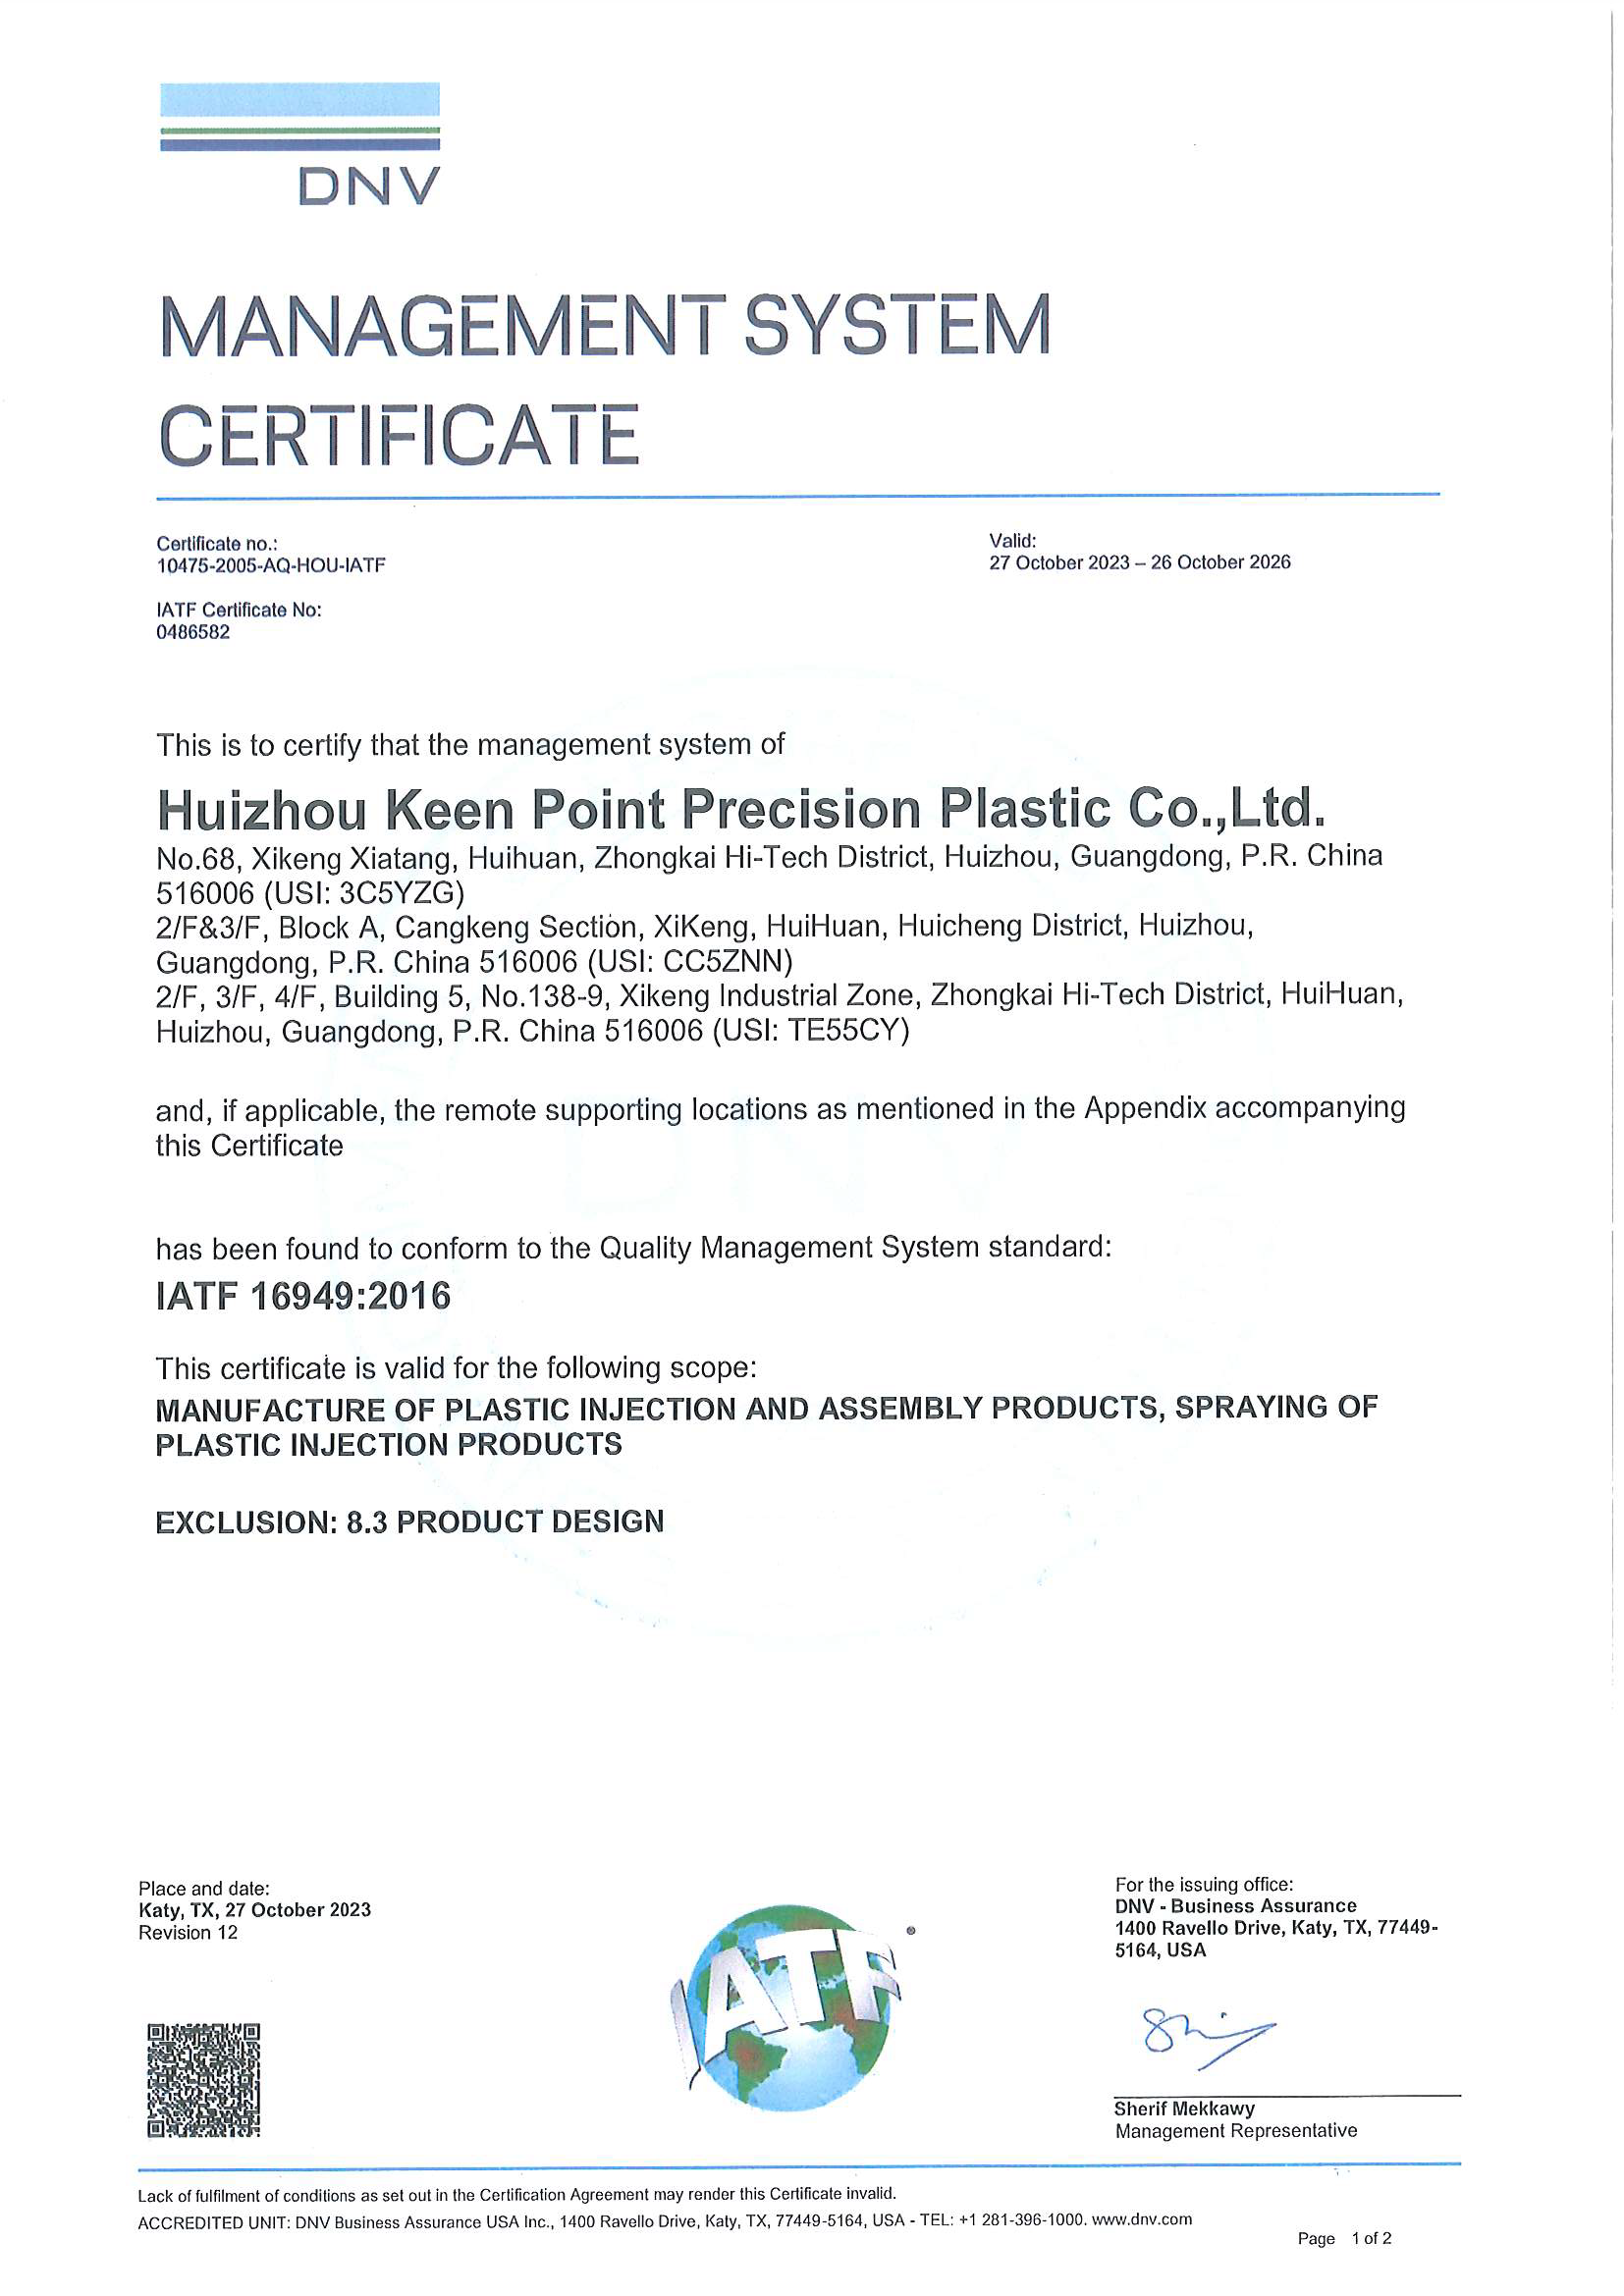 IATF 16949 Certificate of Huizhou Keen Point Precision Plastic Co., Ltd.